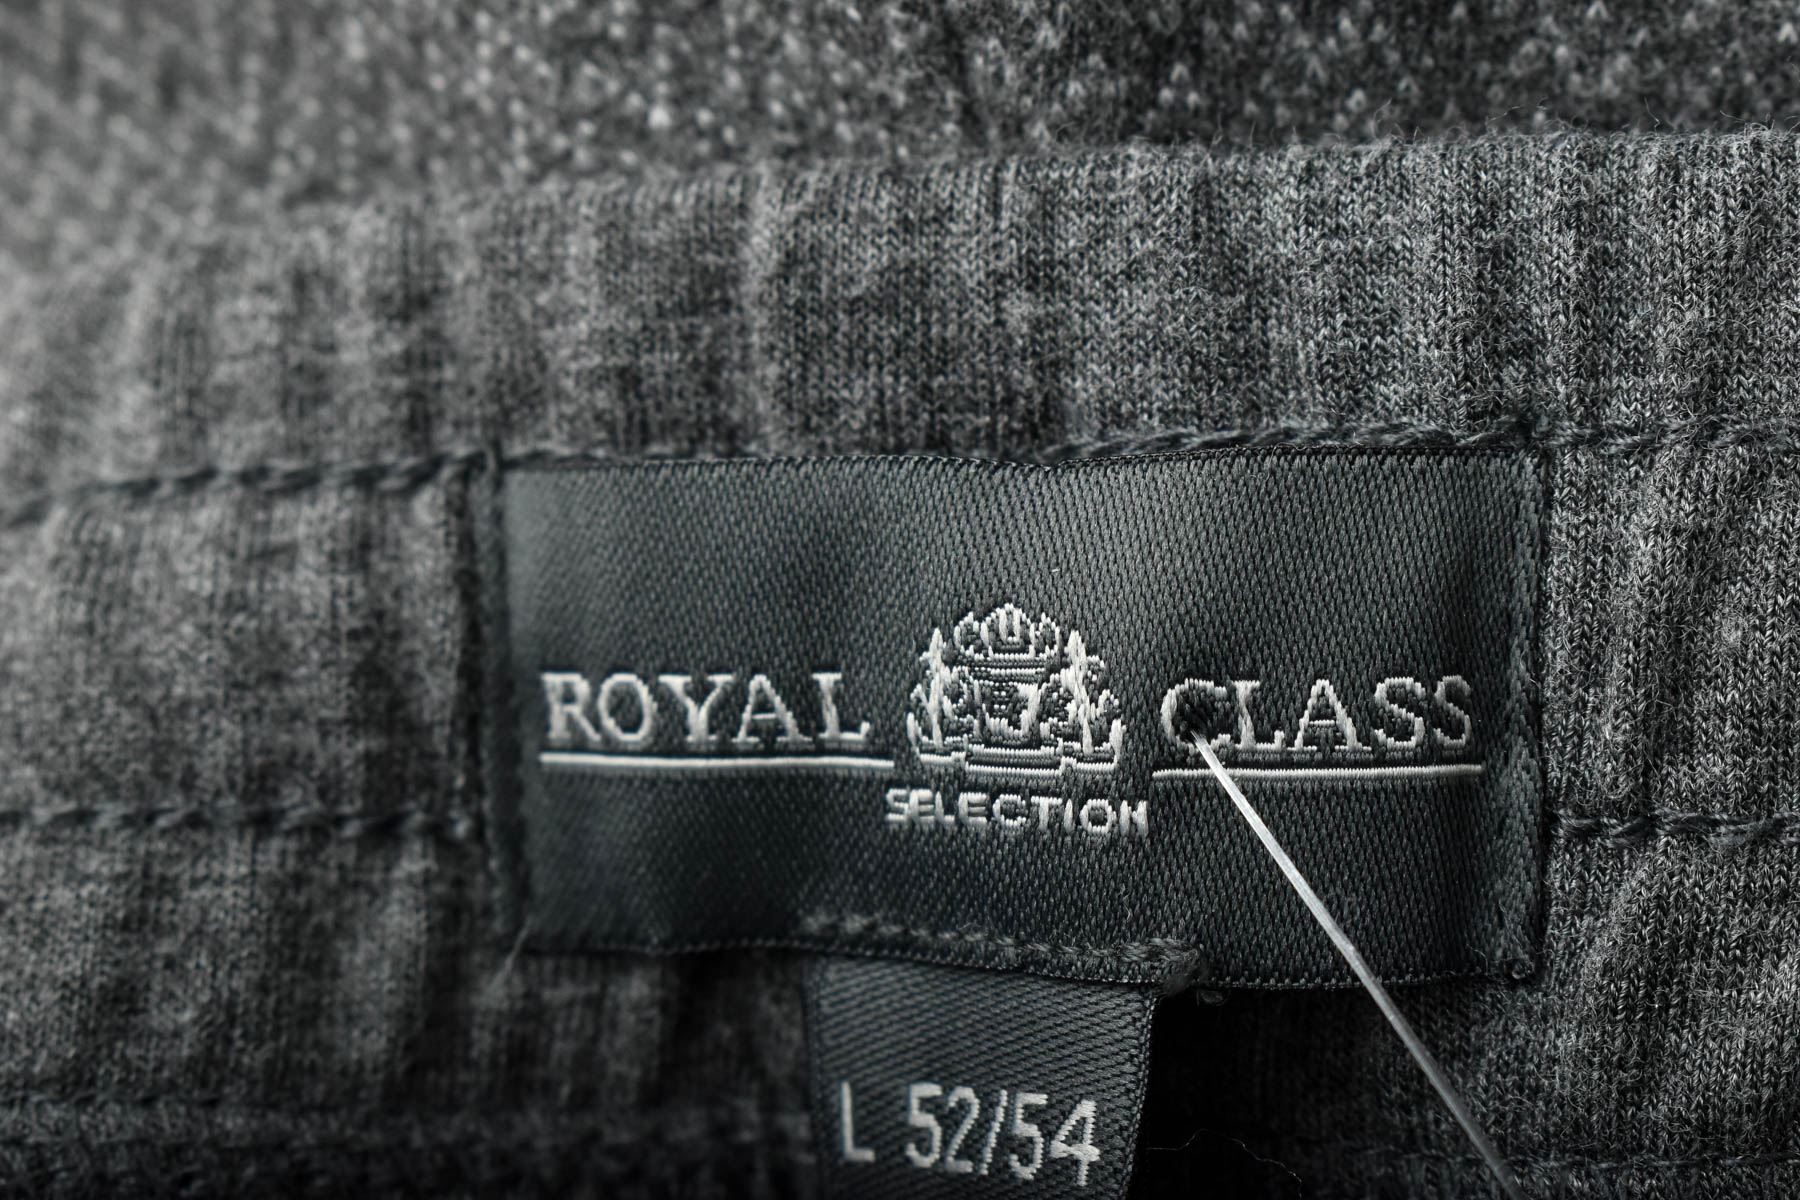 Men's trousers - Royal Class - 2